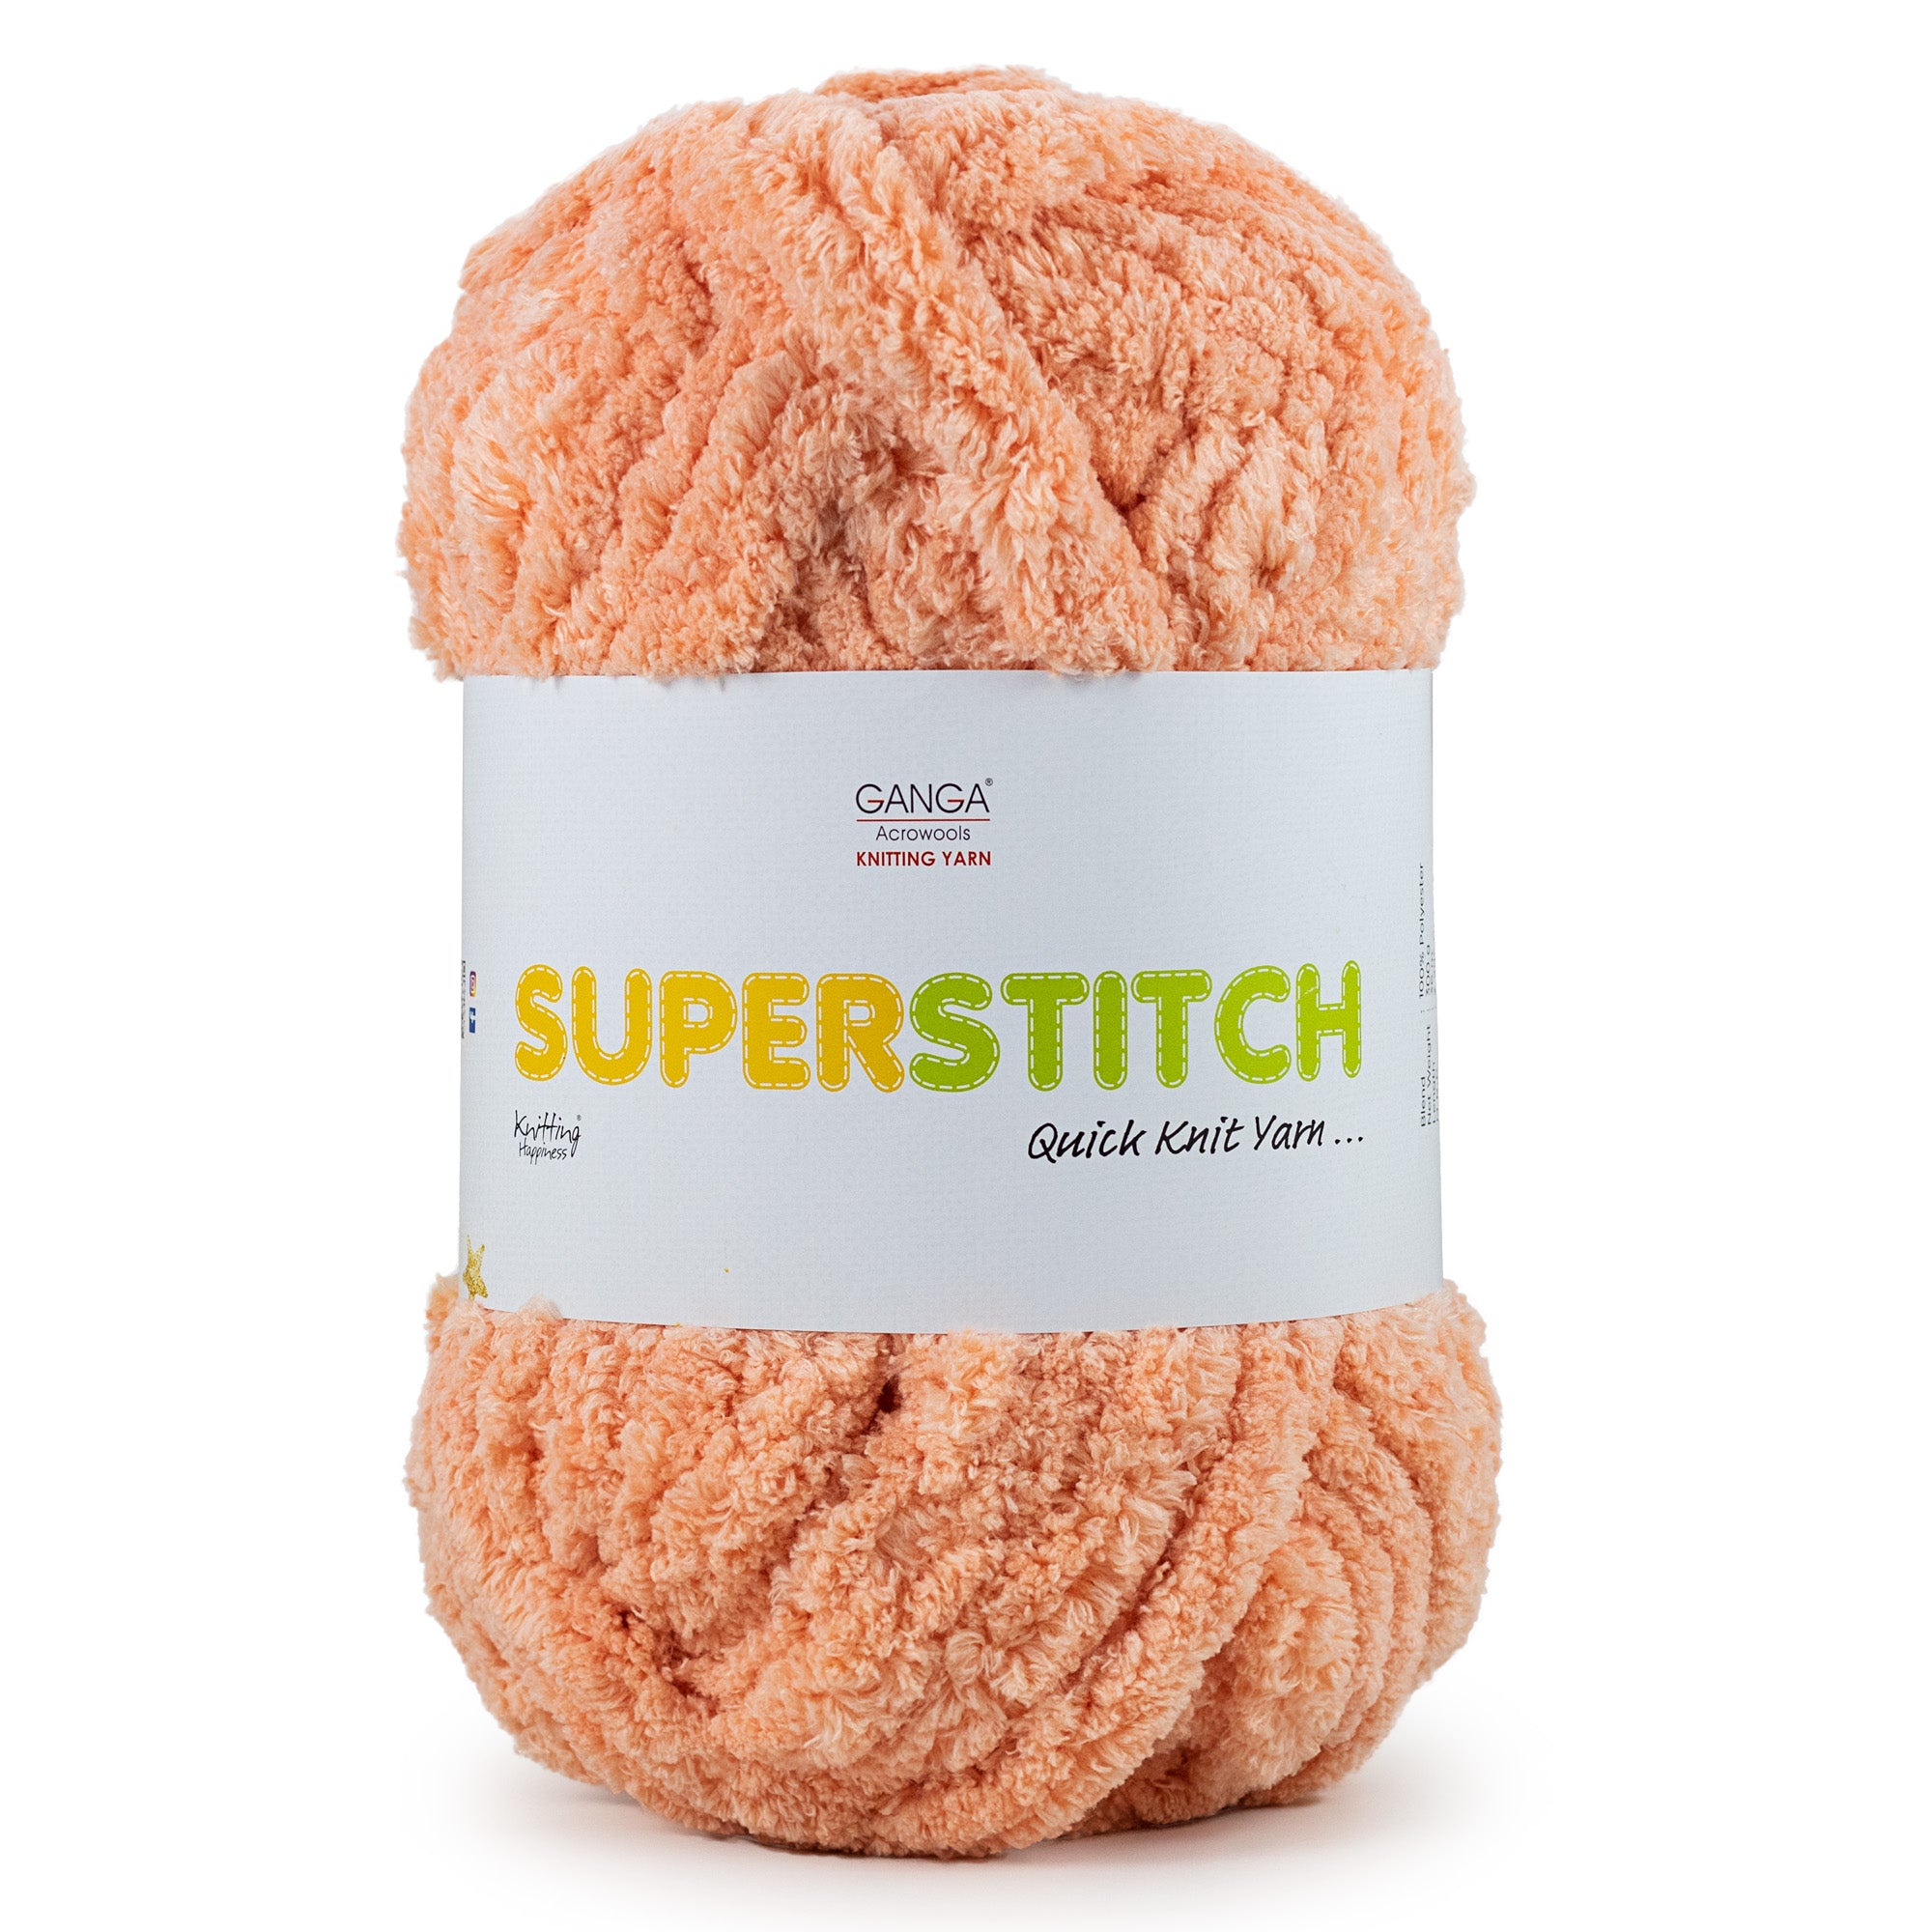 Super Stitch Quick Knit Yarn